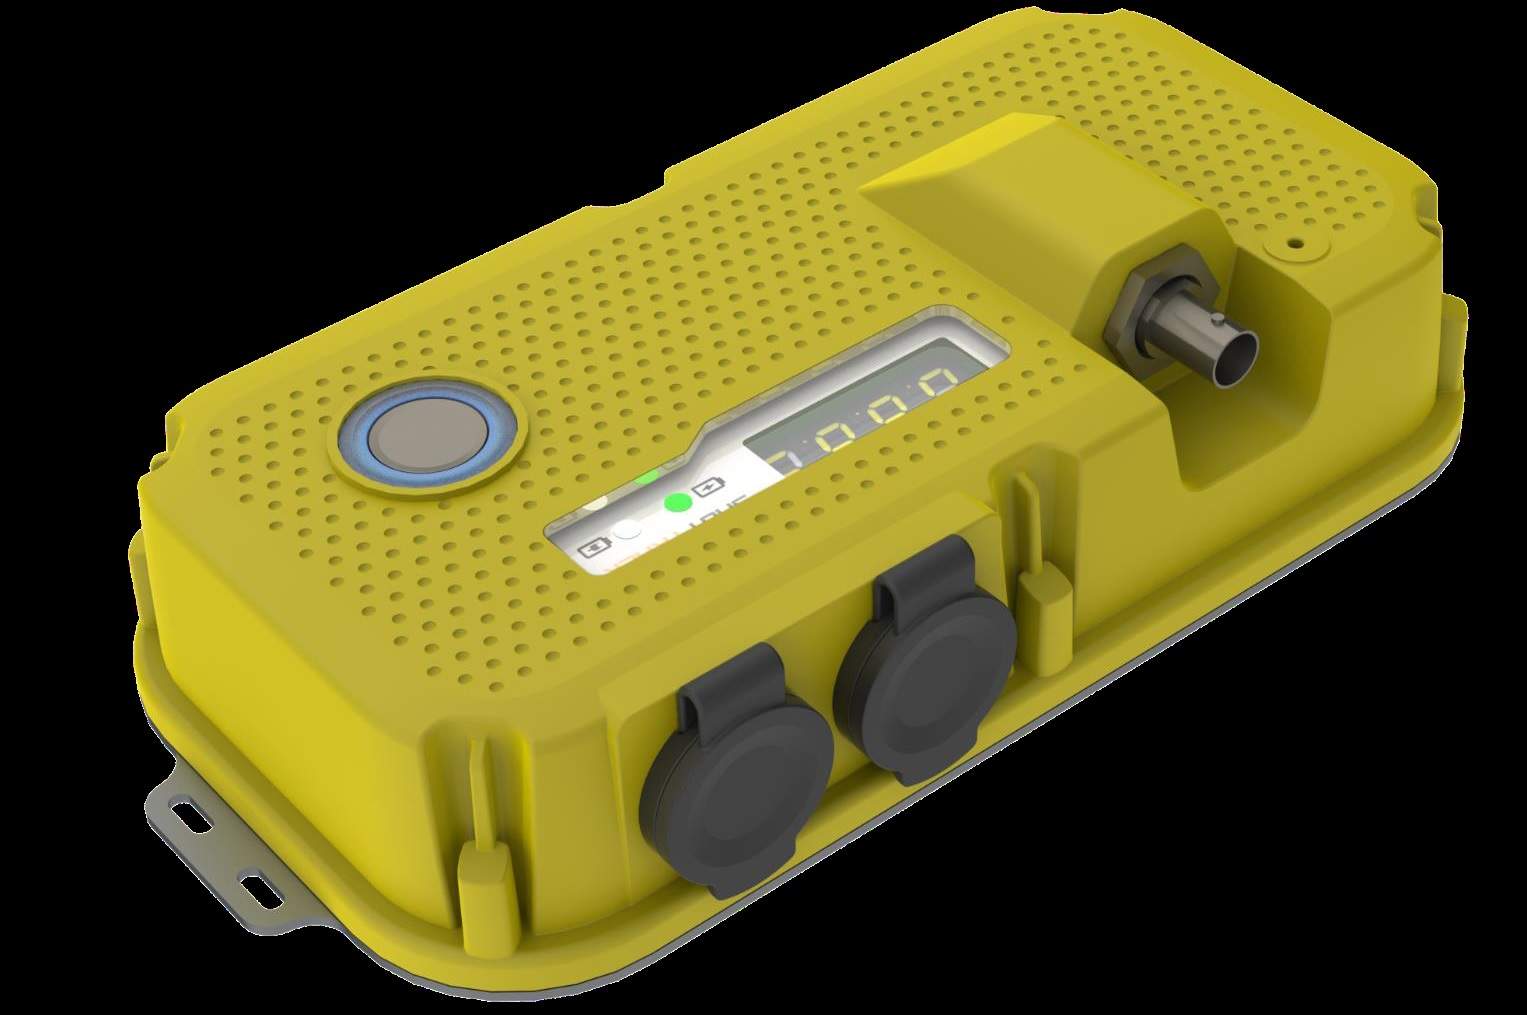 The ShotTrack VoD 305 Next-Generation Velocity of Detonation Monitor